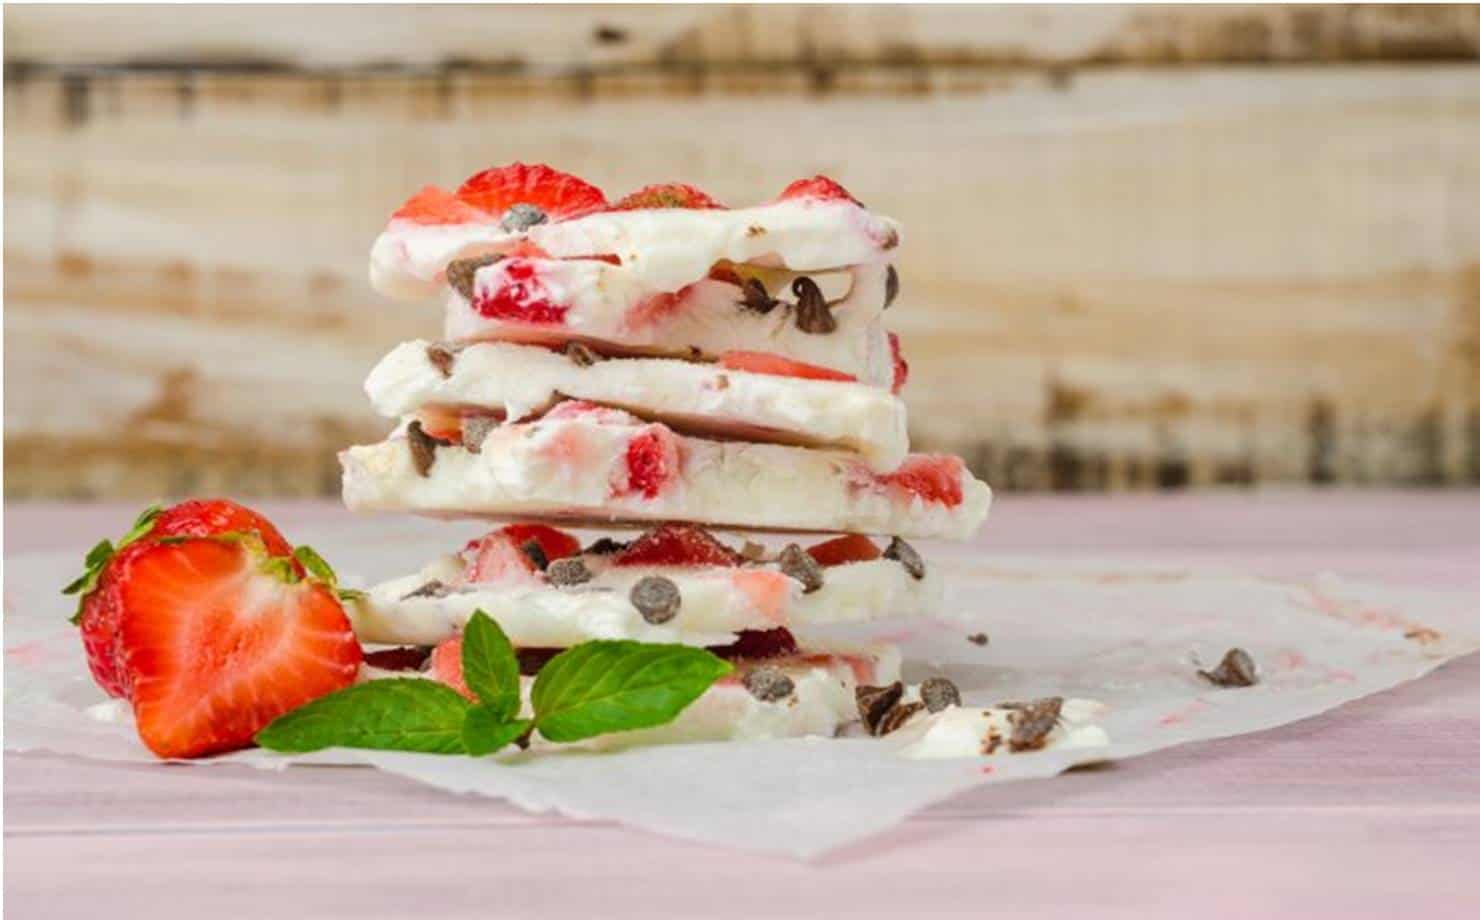 Lanche Saudável: prepare deliciosas barras de iogurte, chocolate e frutas